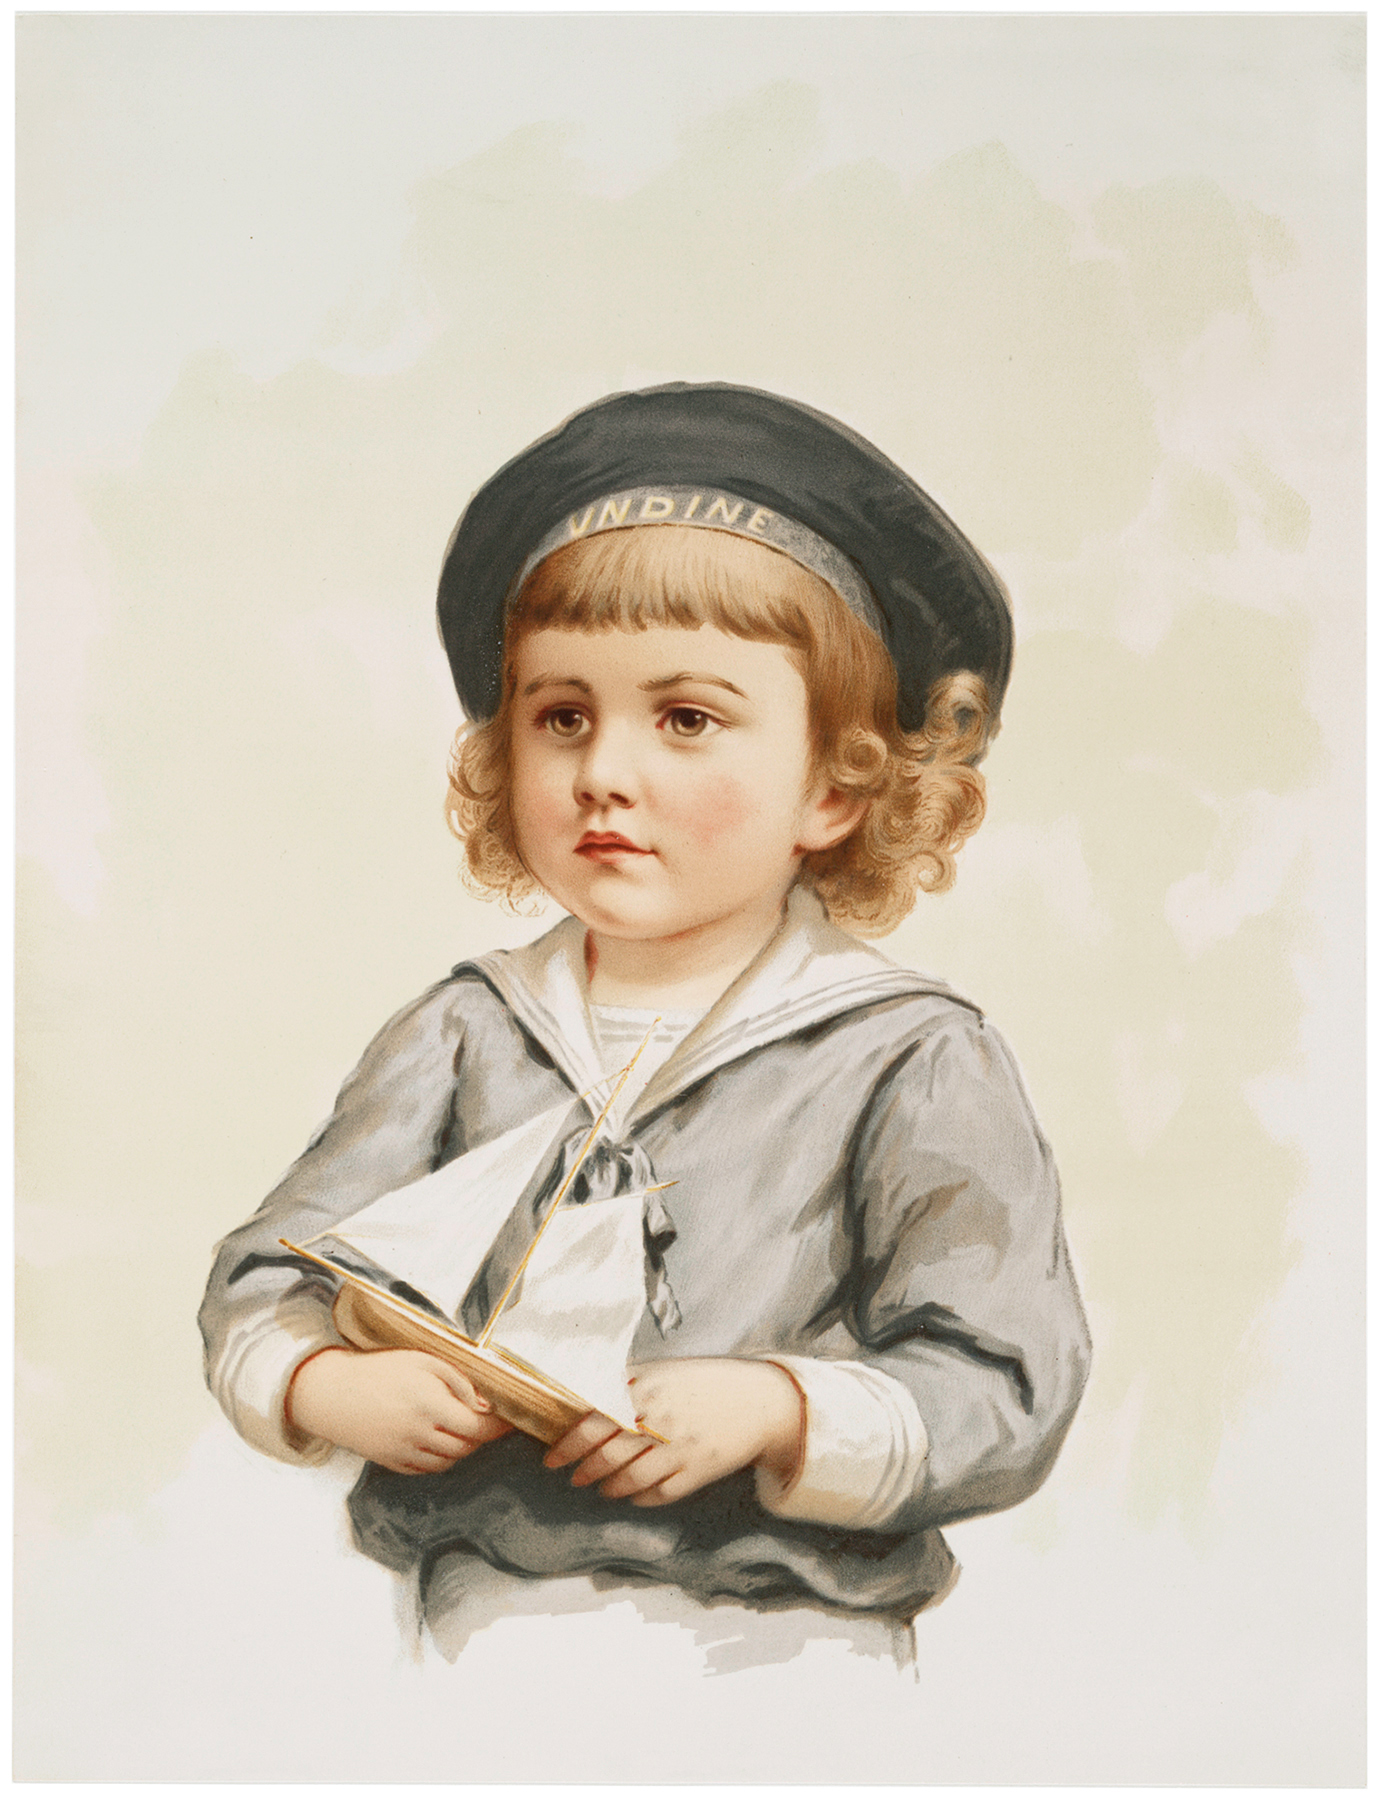 Beautiful Vintage Sailor Boy Image! - The Graphics Fairy